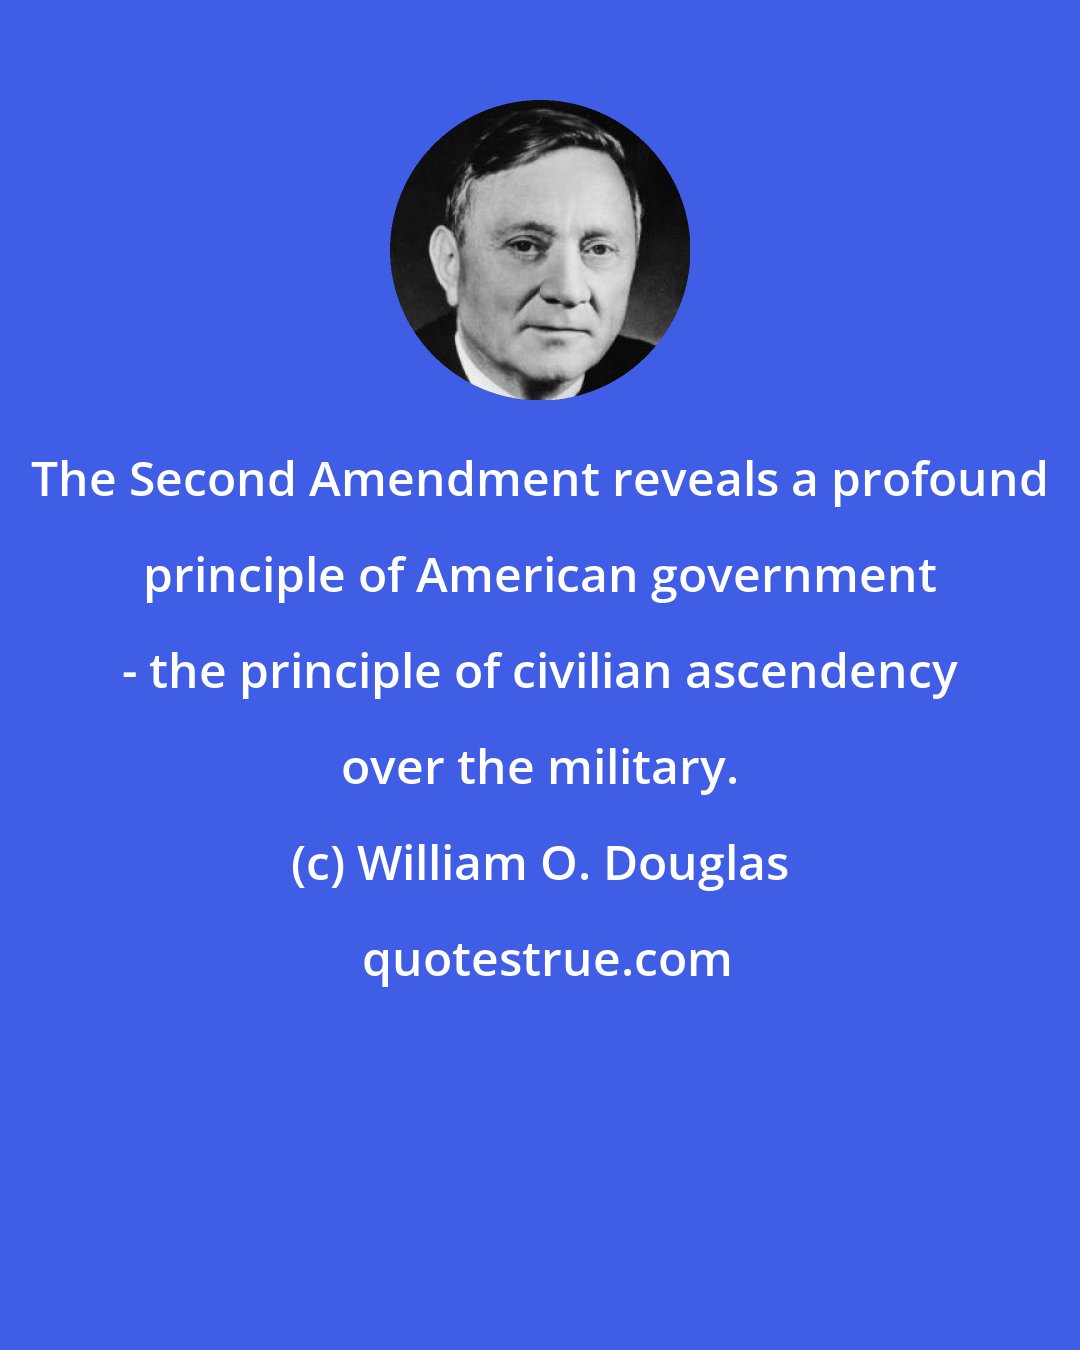 William O. Douglas: The Second Amendment reveals a profound principle of American government - the principle of civilian ascendency over the military.